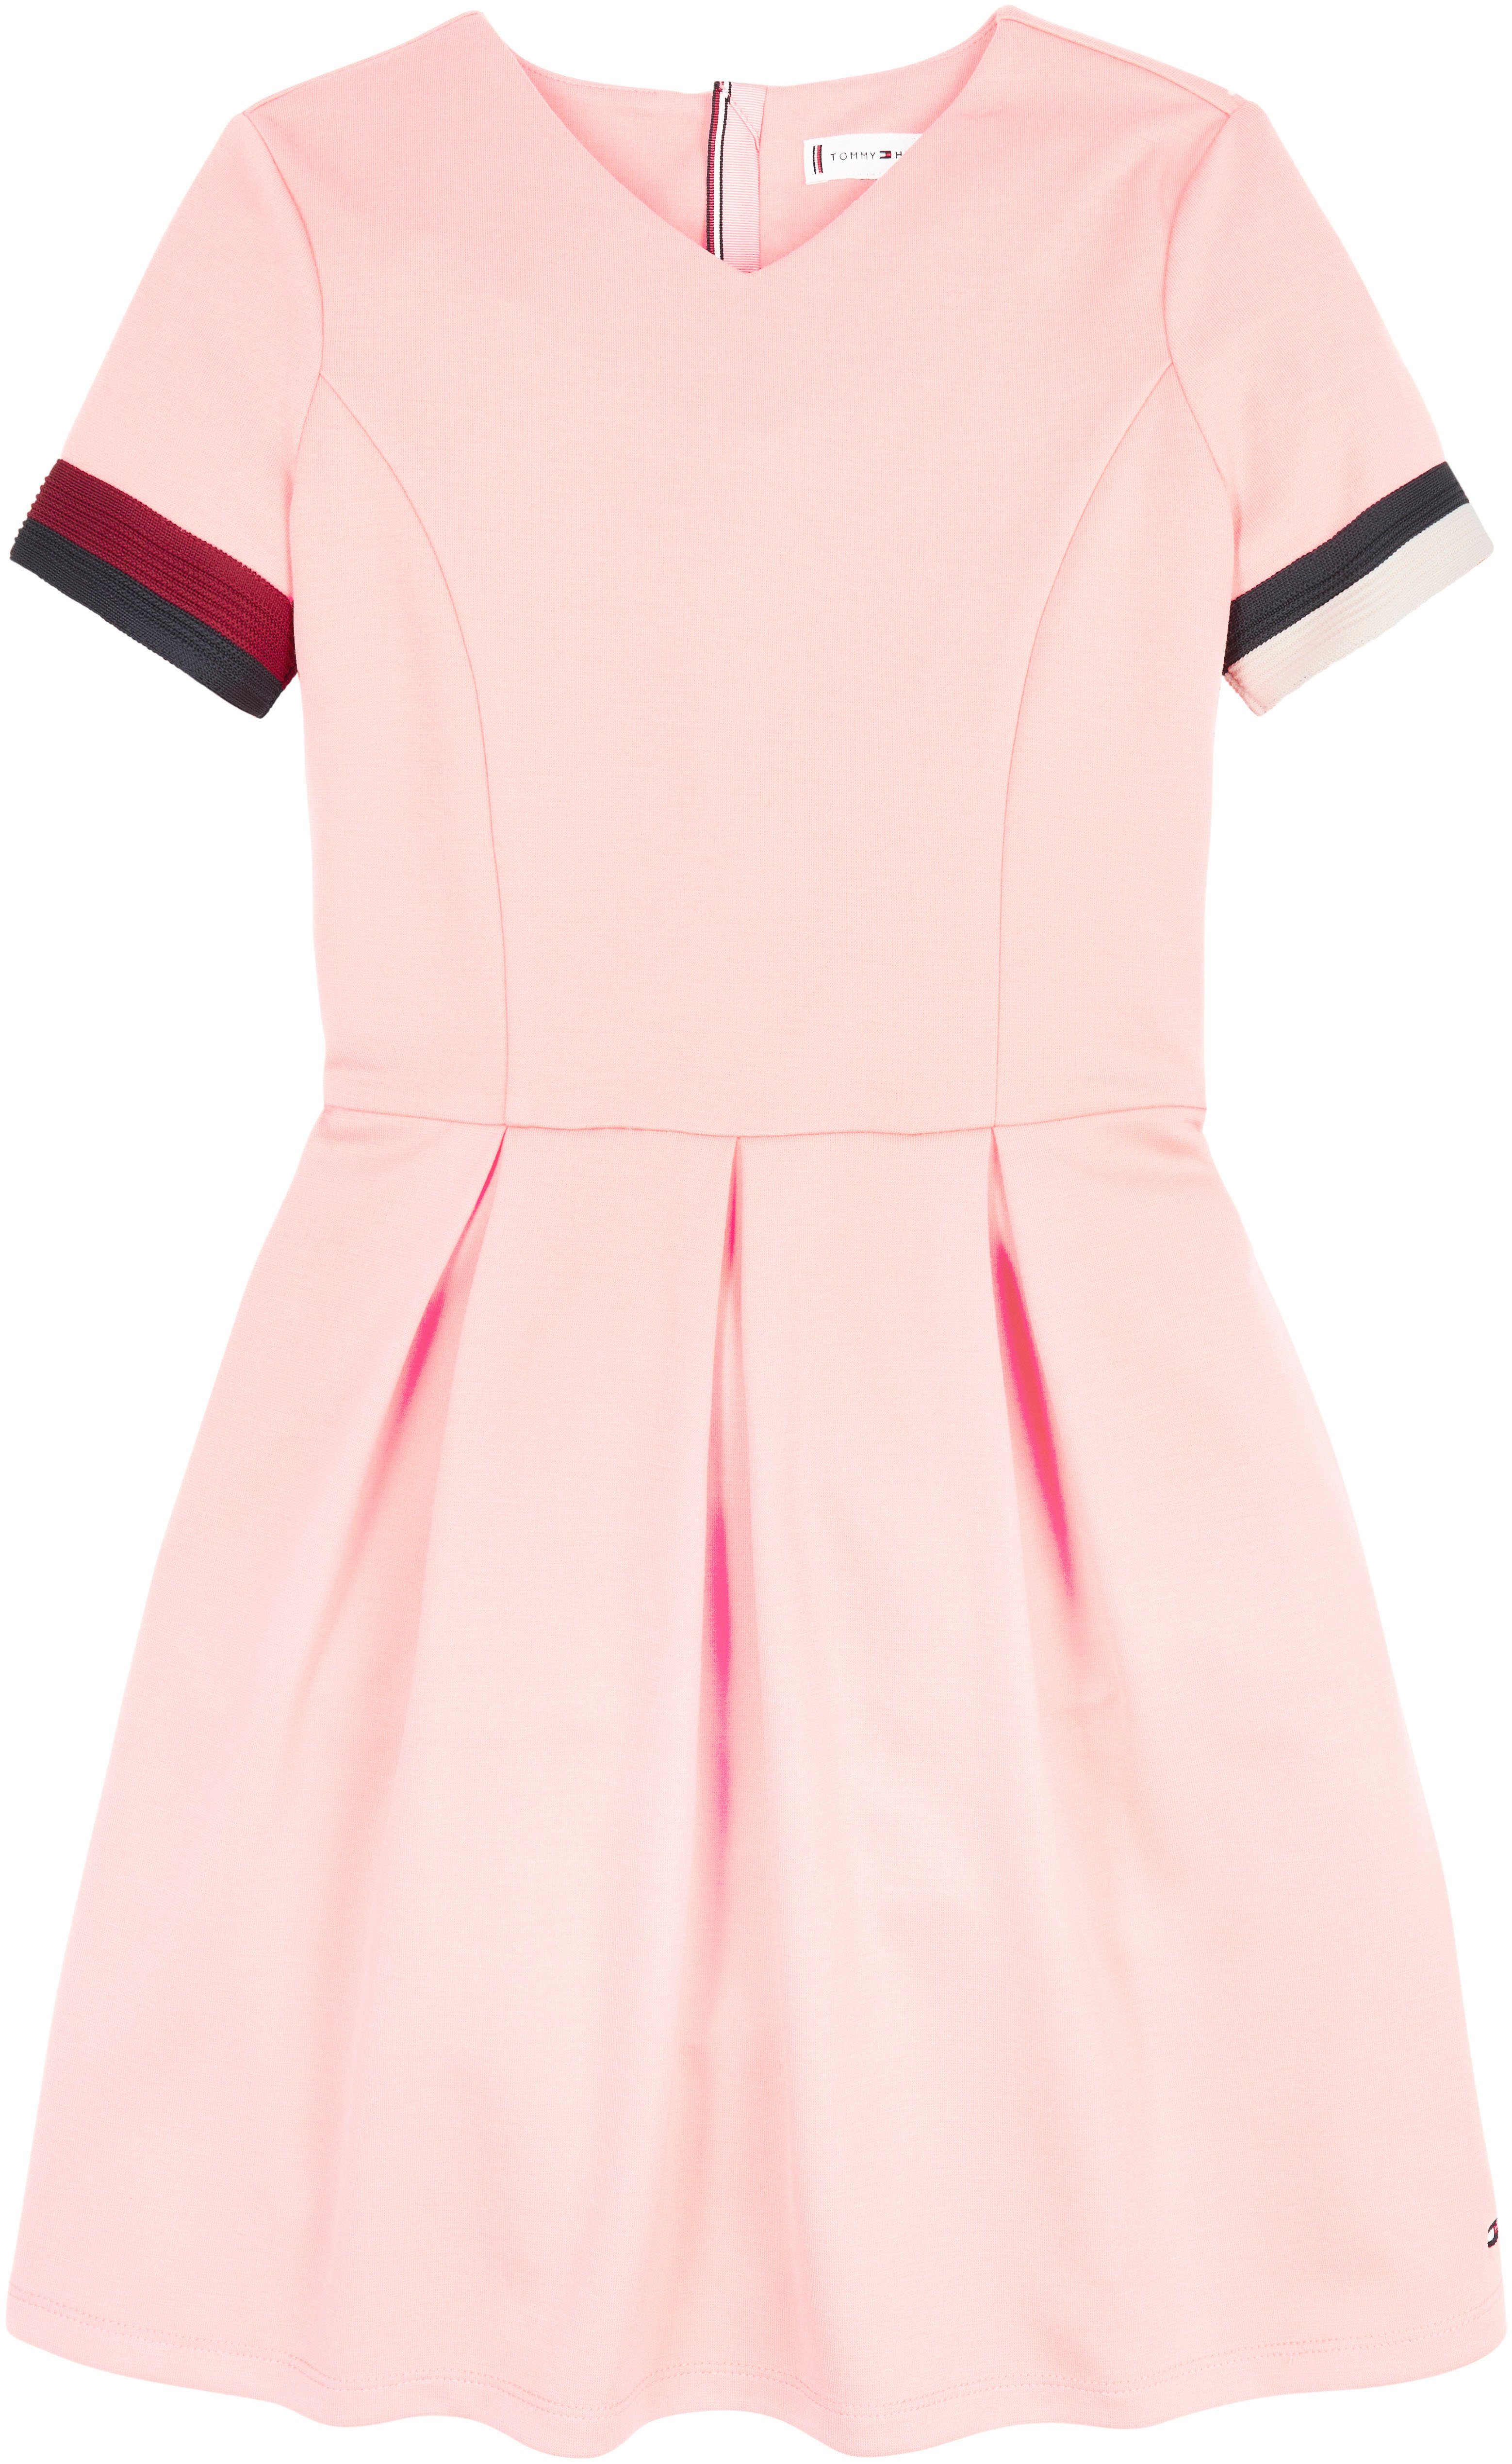 Mädchen Blusenkleid STRIPE Hilfiger Kids Junior PUNTO Tommy Kinder MiniMe,für Pink DRESS GLOBAL Crystal